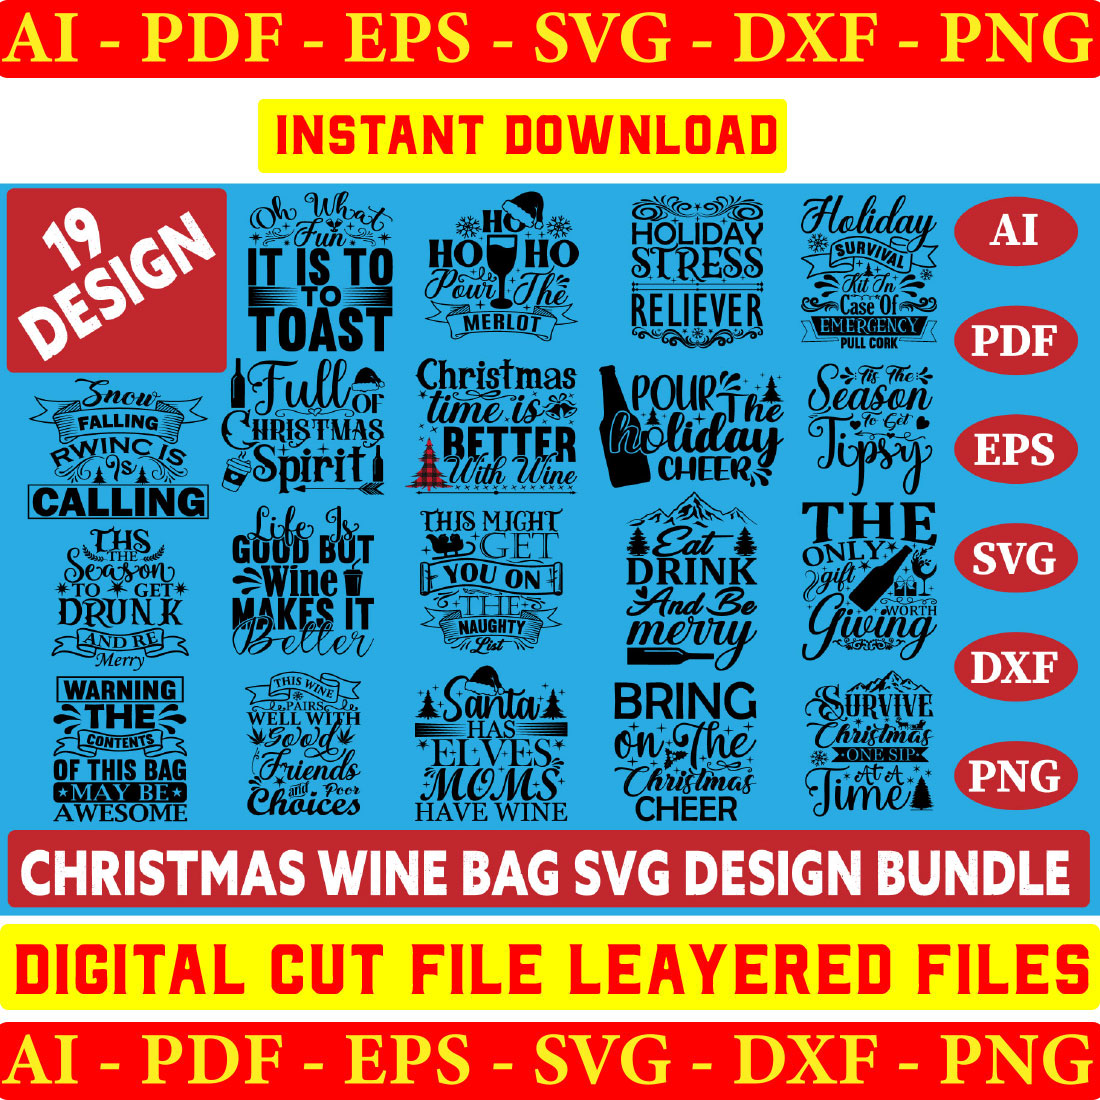 Christmas Wine Bag Svg Design Bundle cover image.